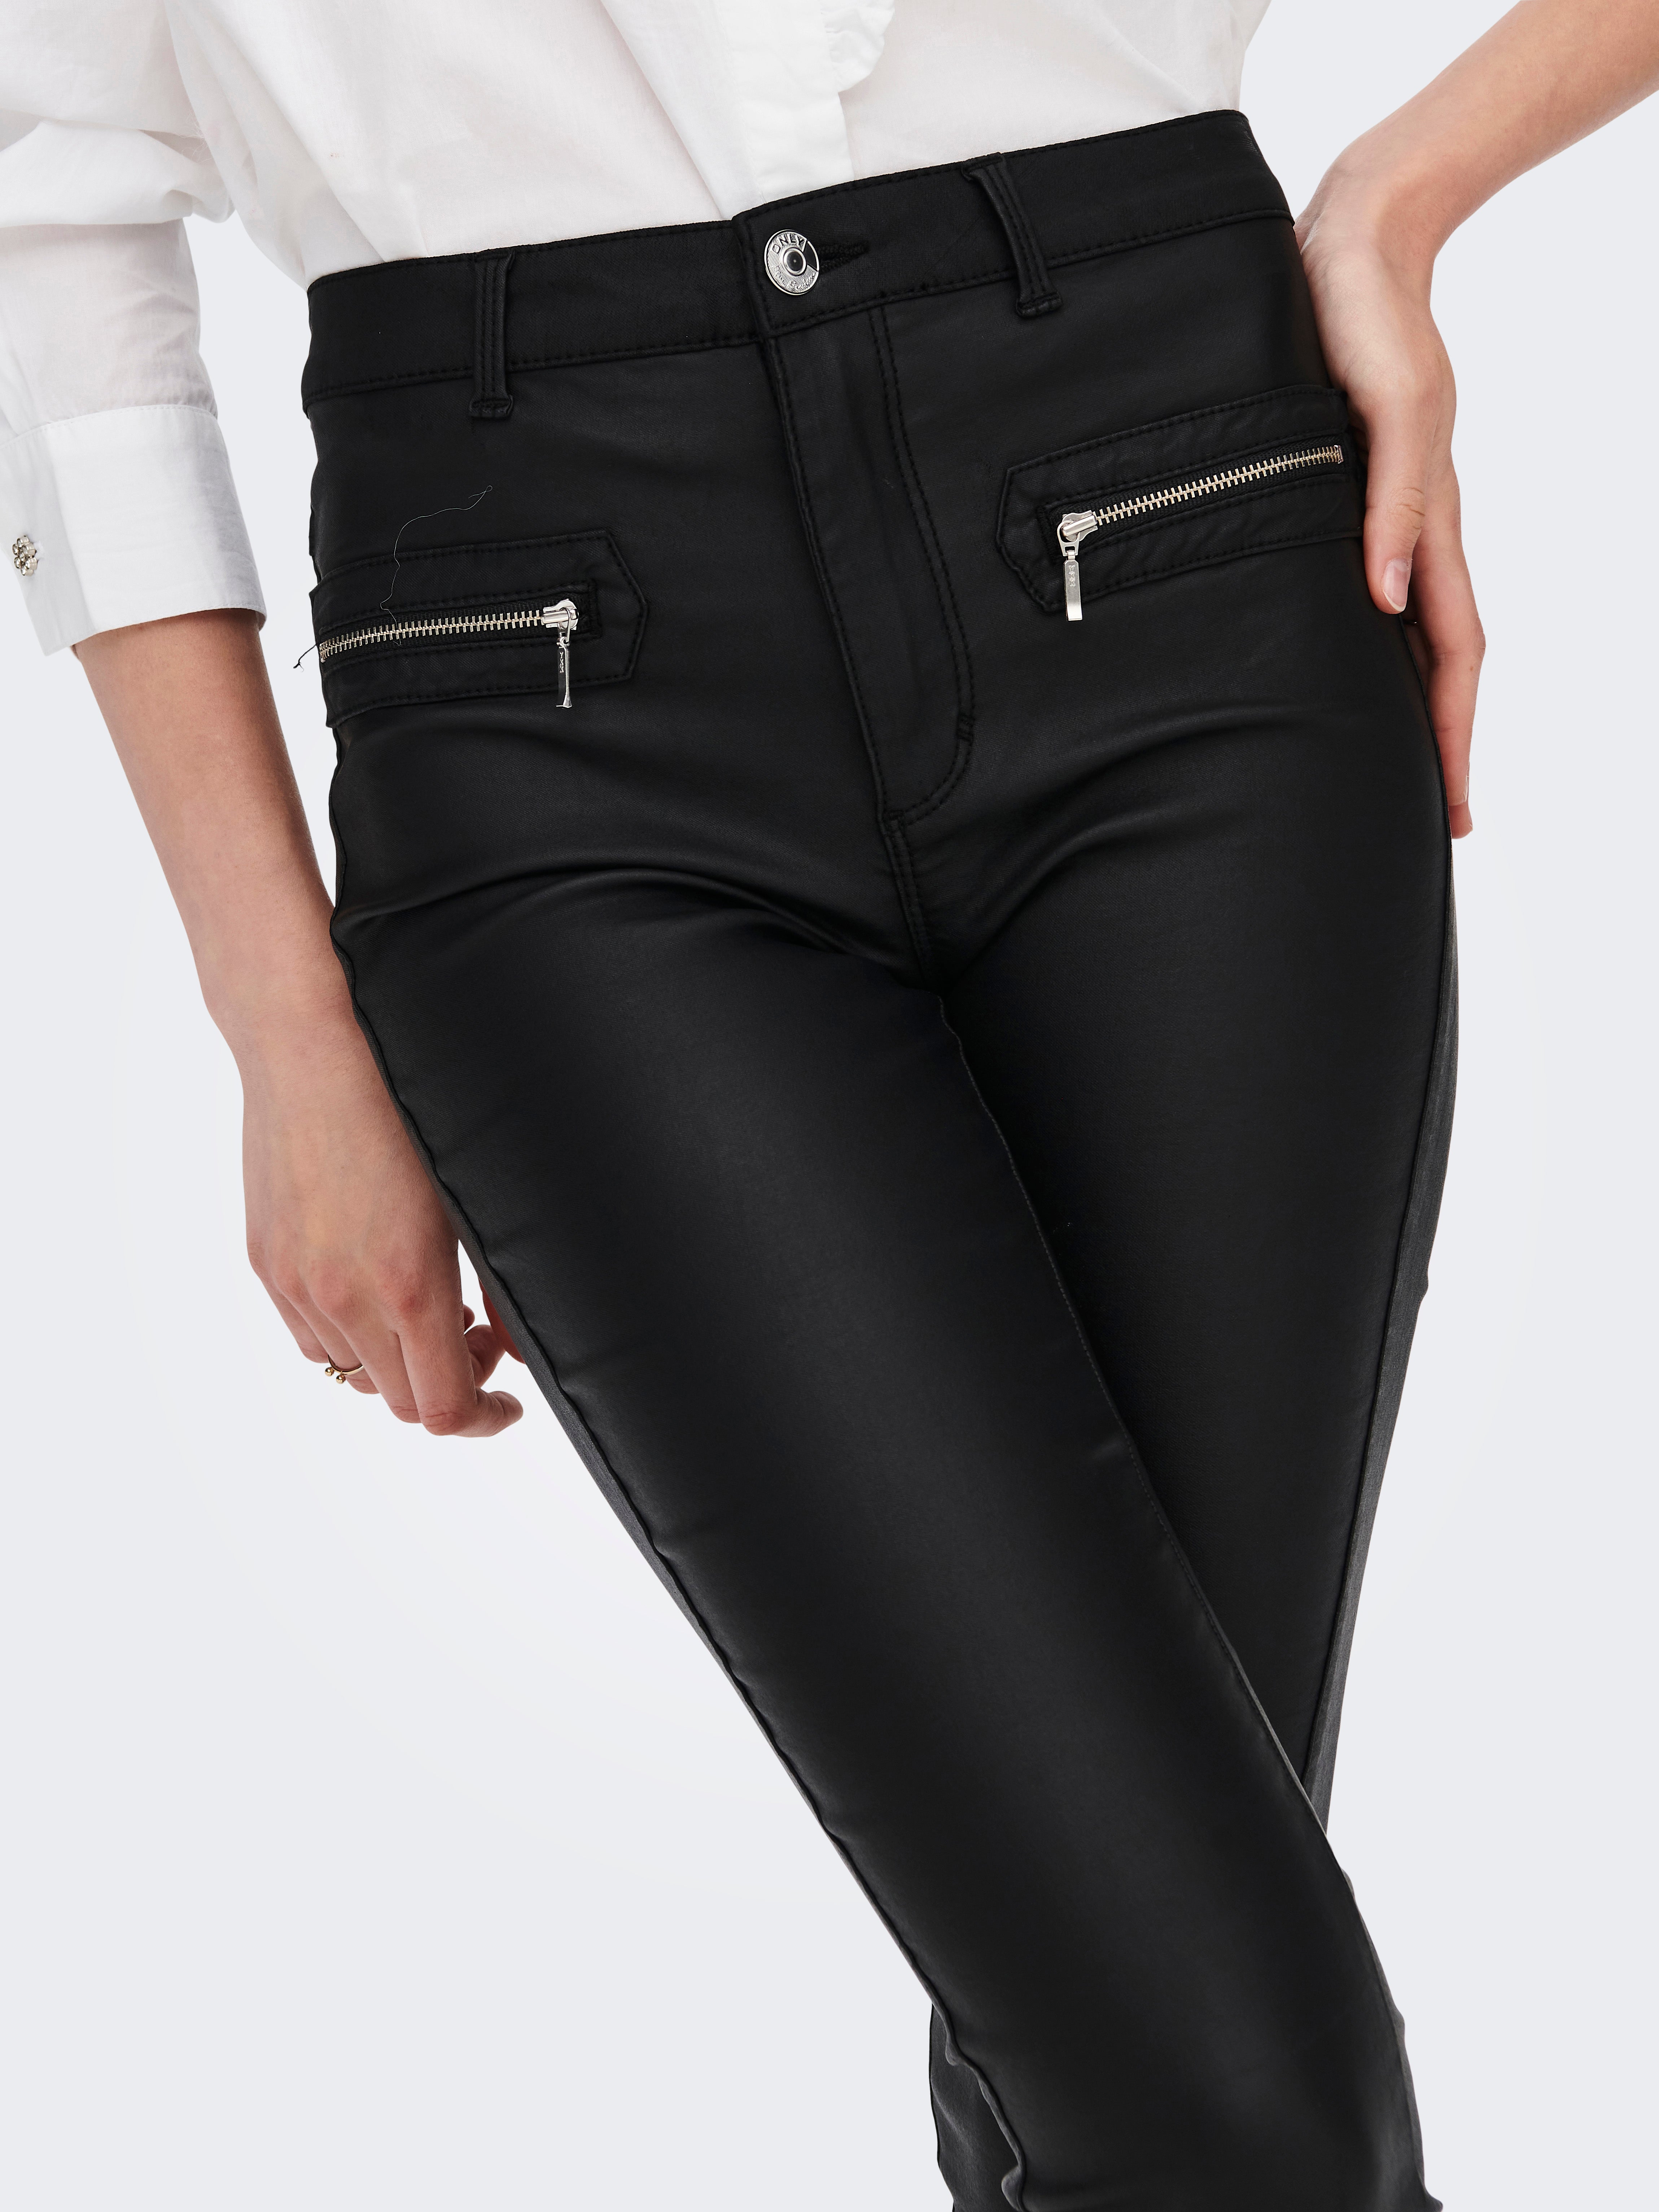 Next Slim fit jeans - black - Zalando.de